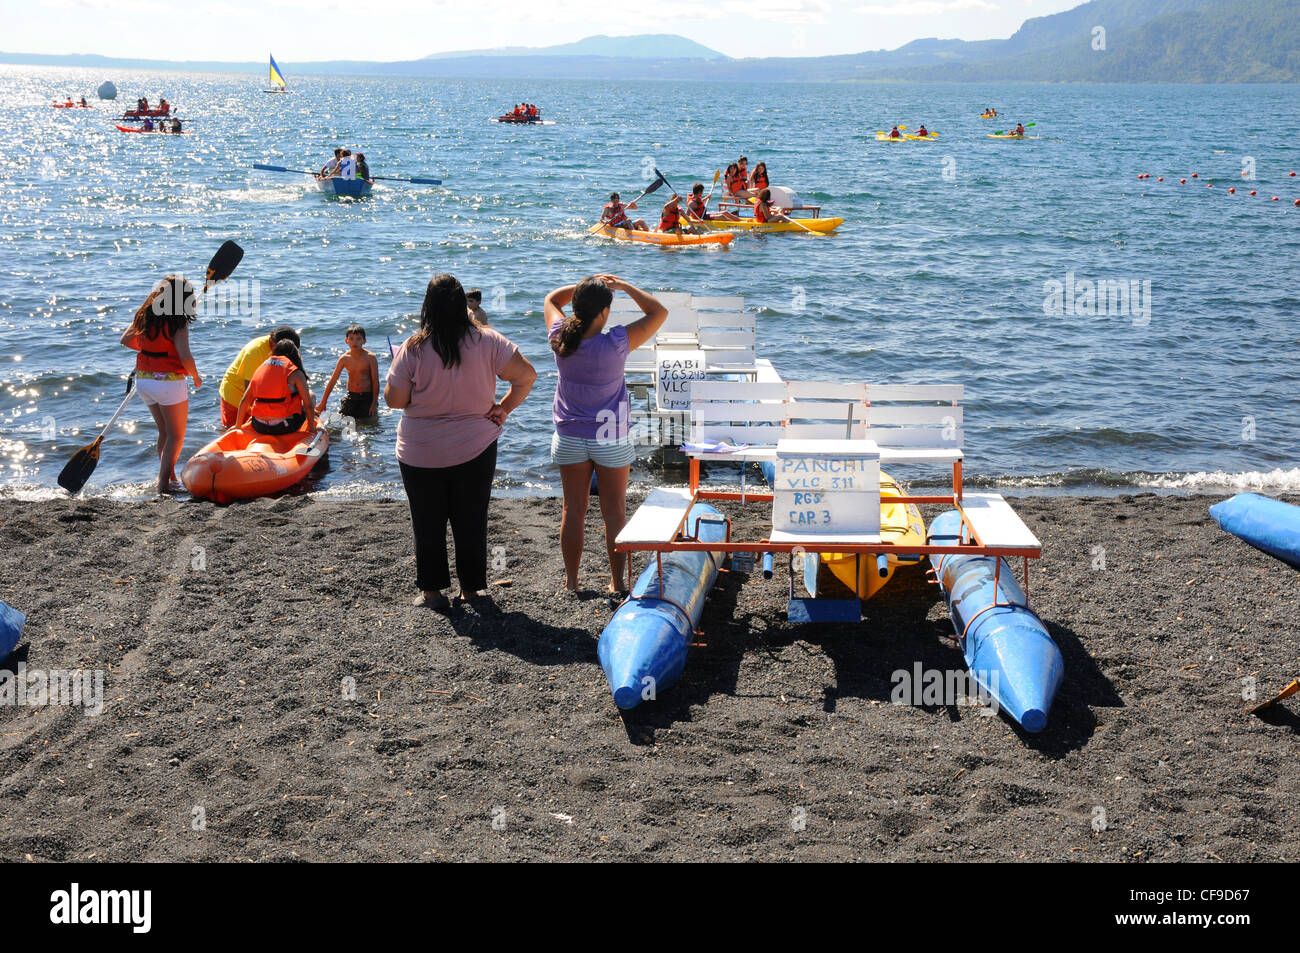 Les vacanciers avec Pédalo, canot, bateau à rames, le lac Villarrica, Villarrica Chili. Banque D'Images